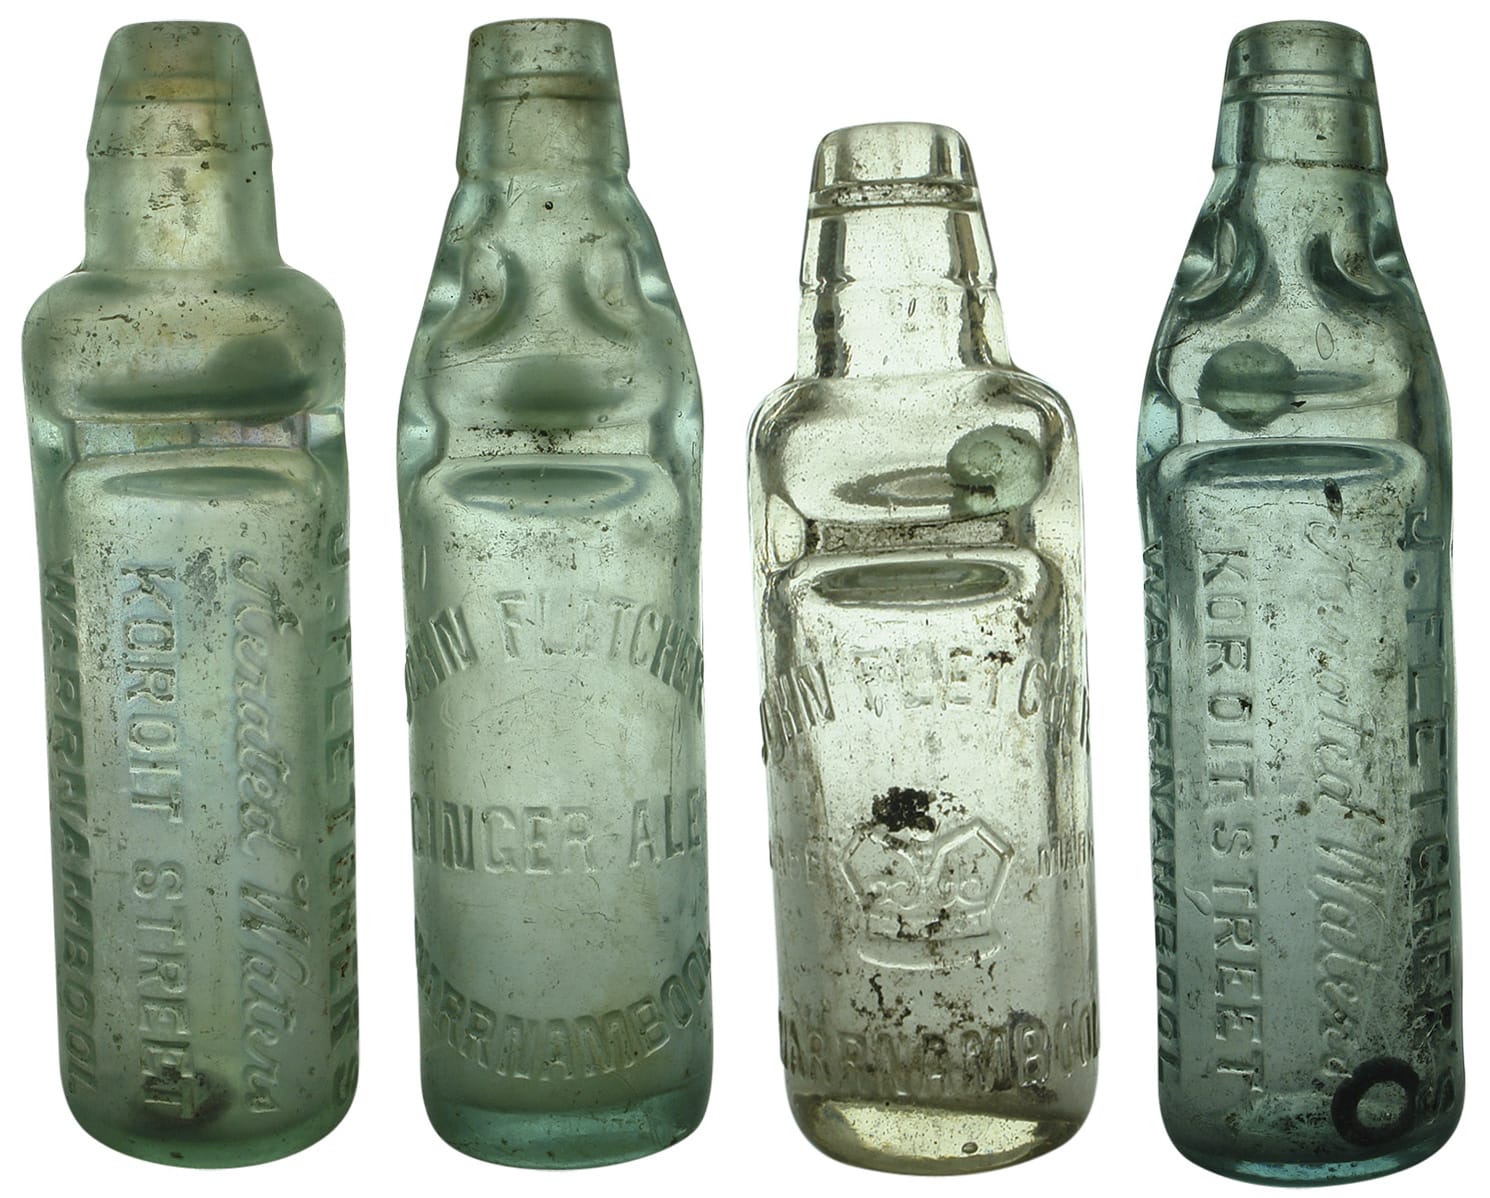 Fletcher Warrnambool Collection Codd Bottles